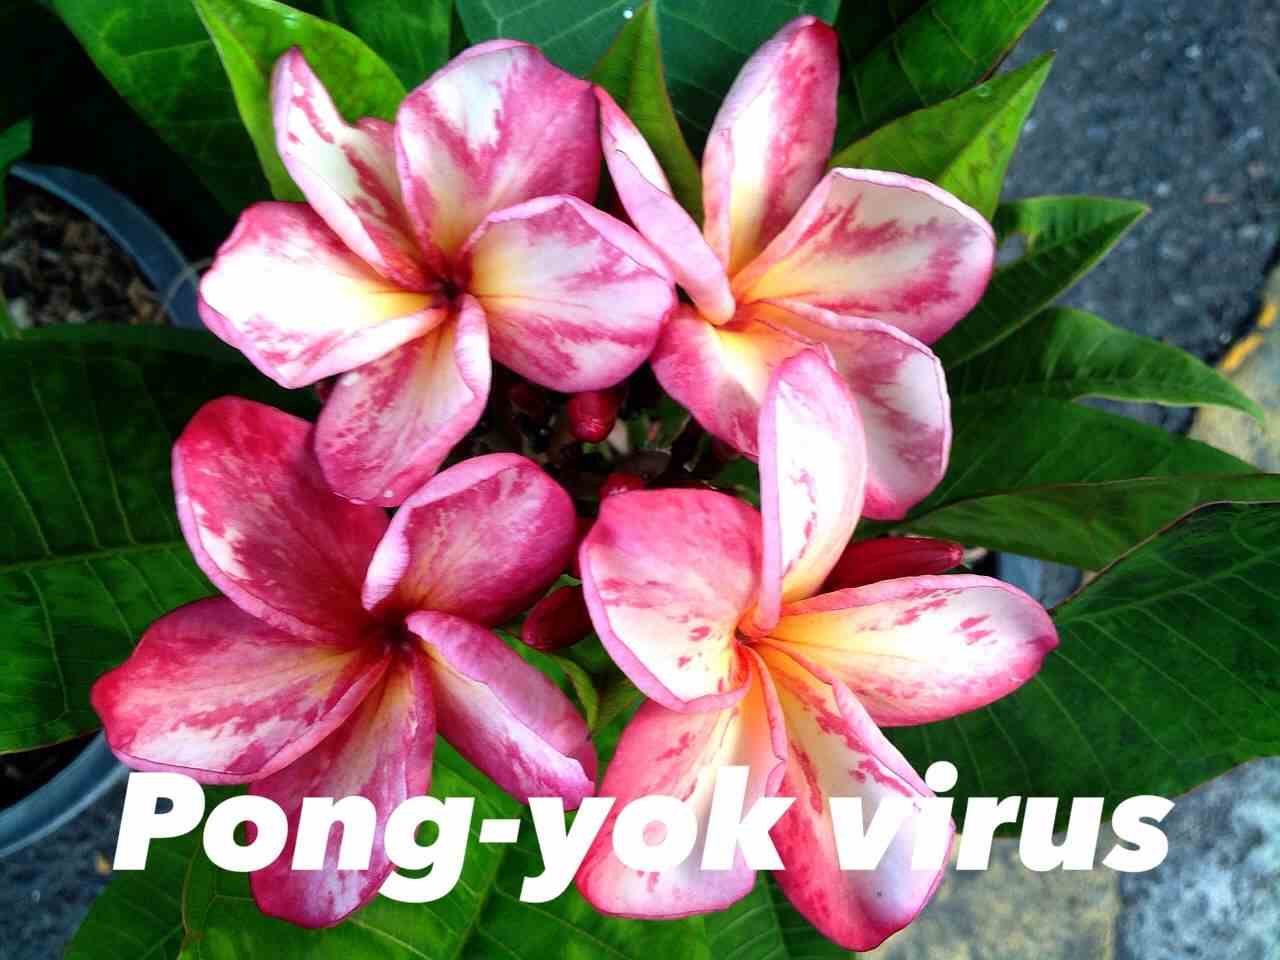 Plumeria rubra "pong yok virus" (frangipanier) taille pot de 2 litres ? 20/30 cm -   blanc/jaune/rose